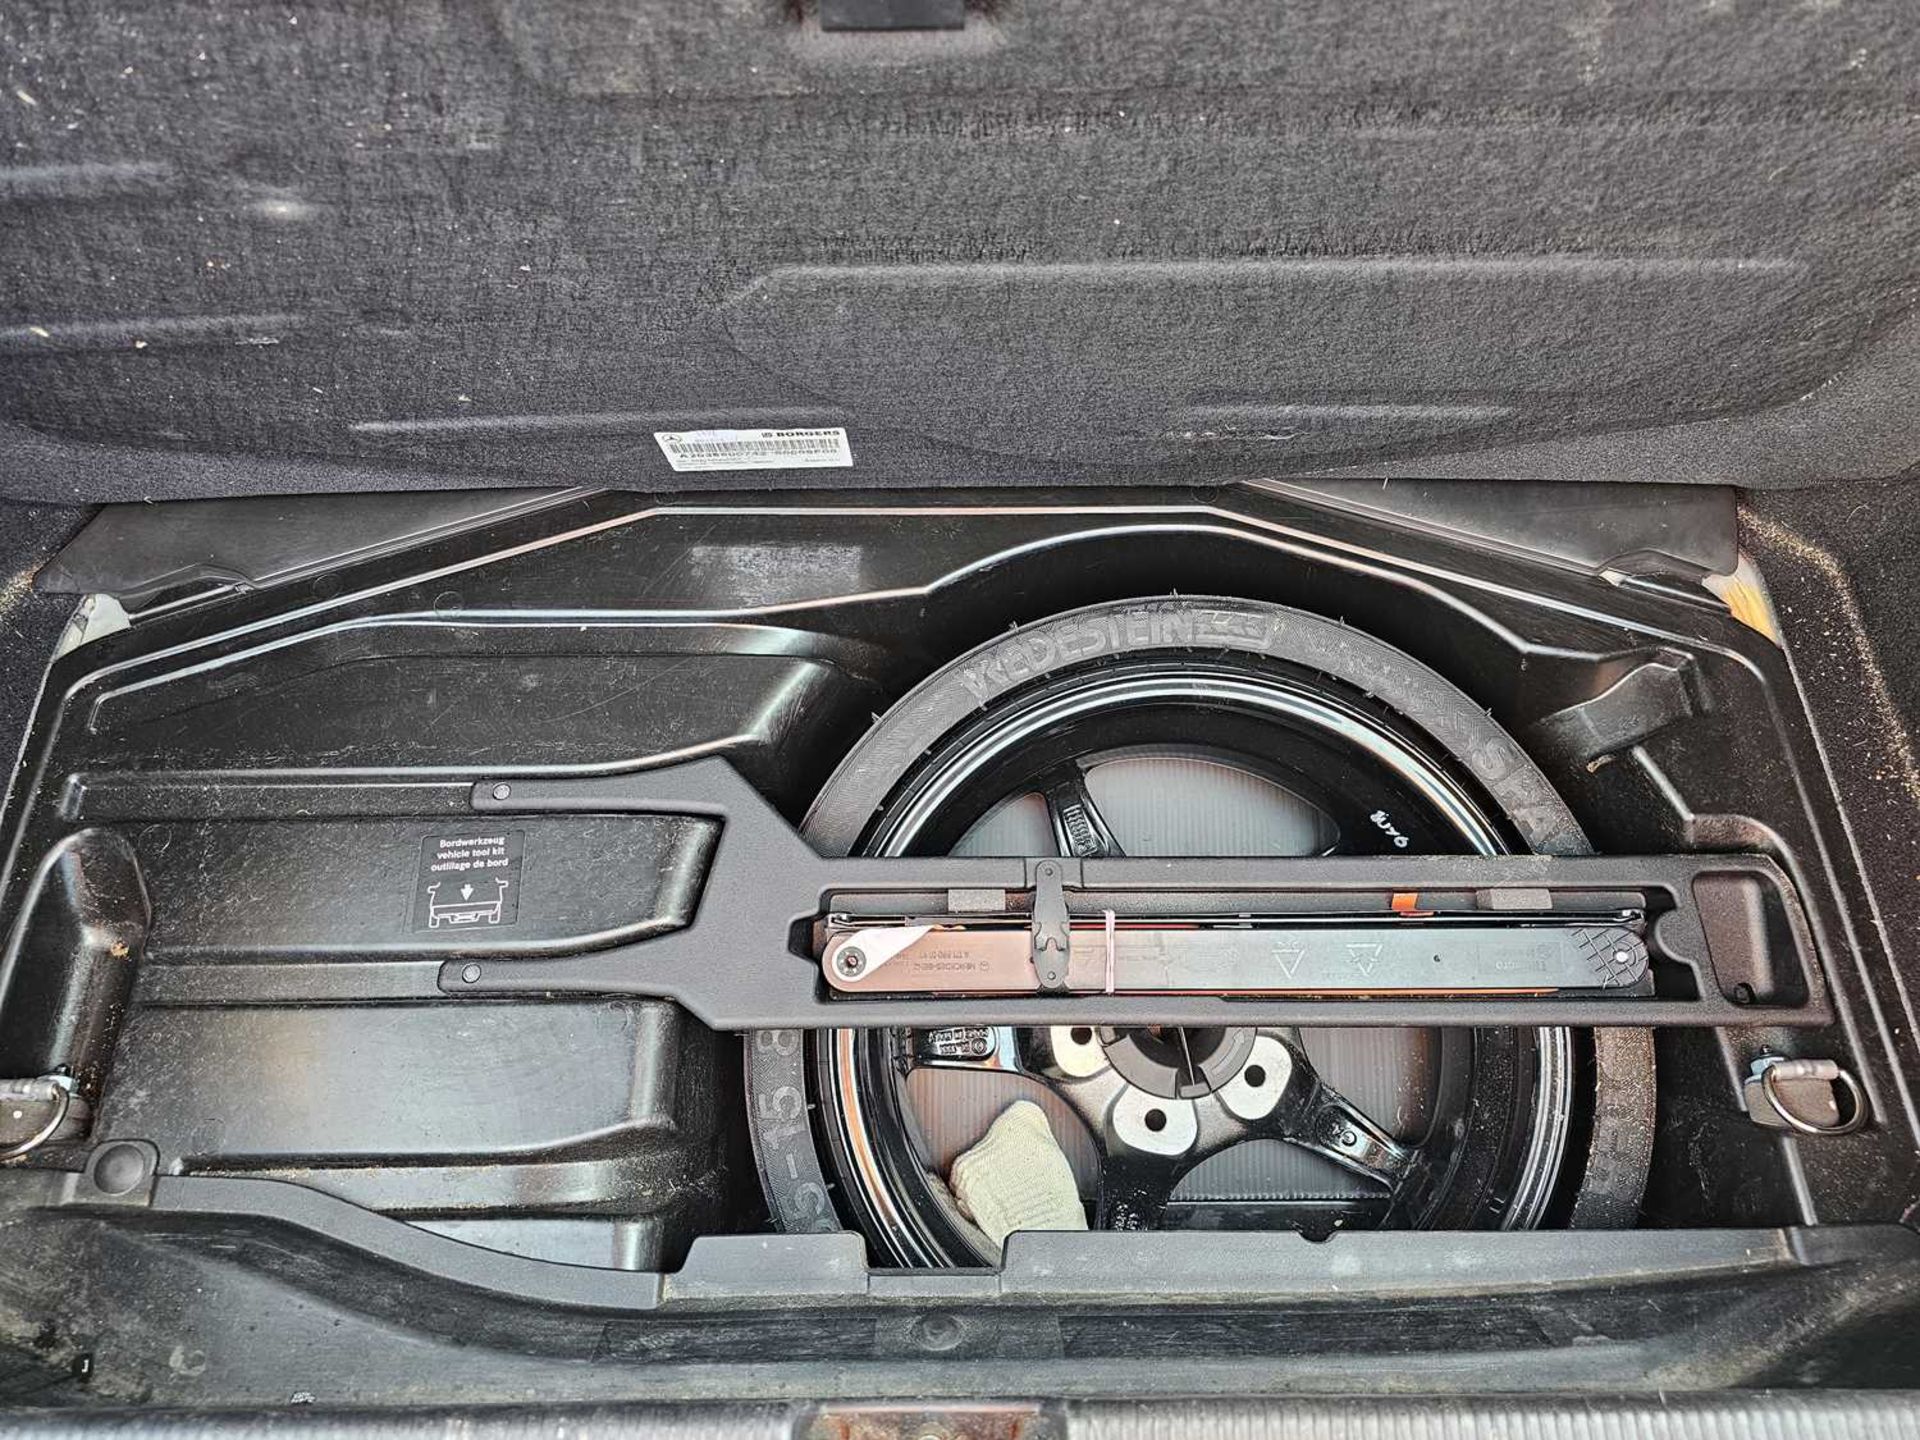 2010 Mercedes CLC220 CDi, Auto, Paddle Shift, Parking Sensors, Full Leather, Heated Seats, Twin Sun  - Image 14 of 29